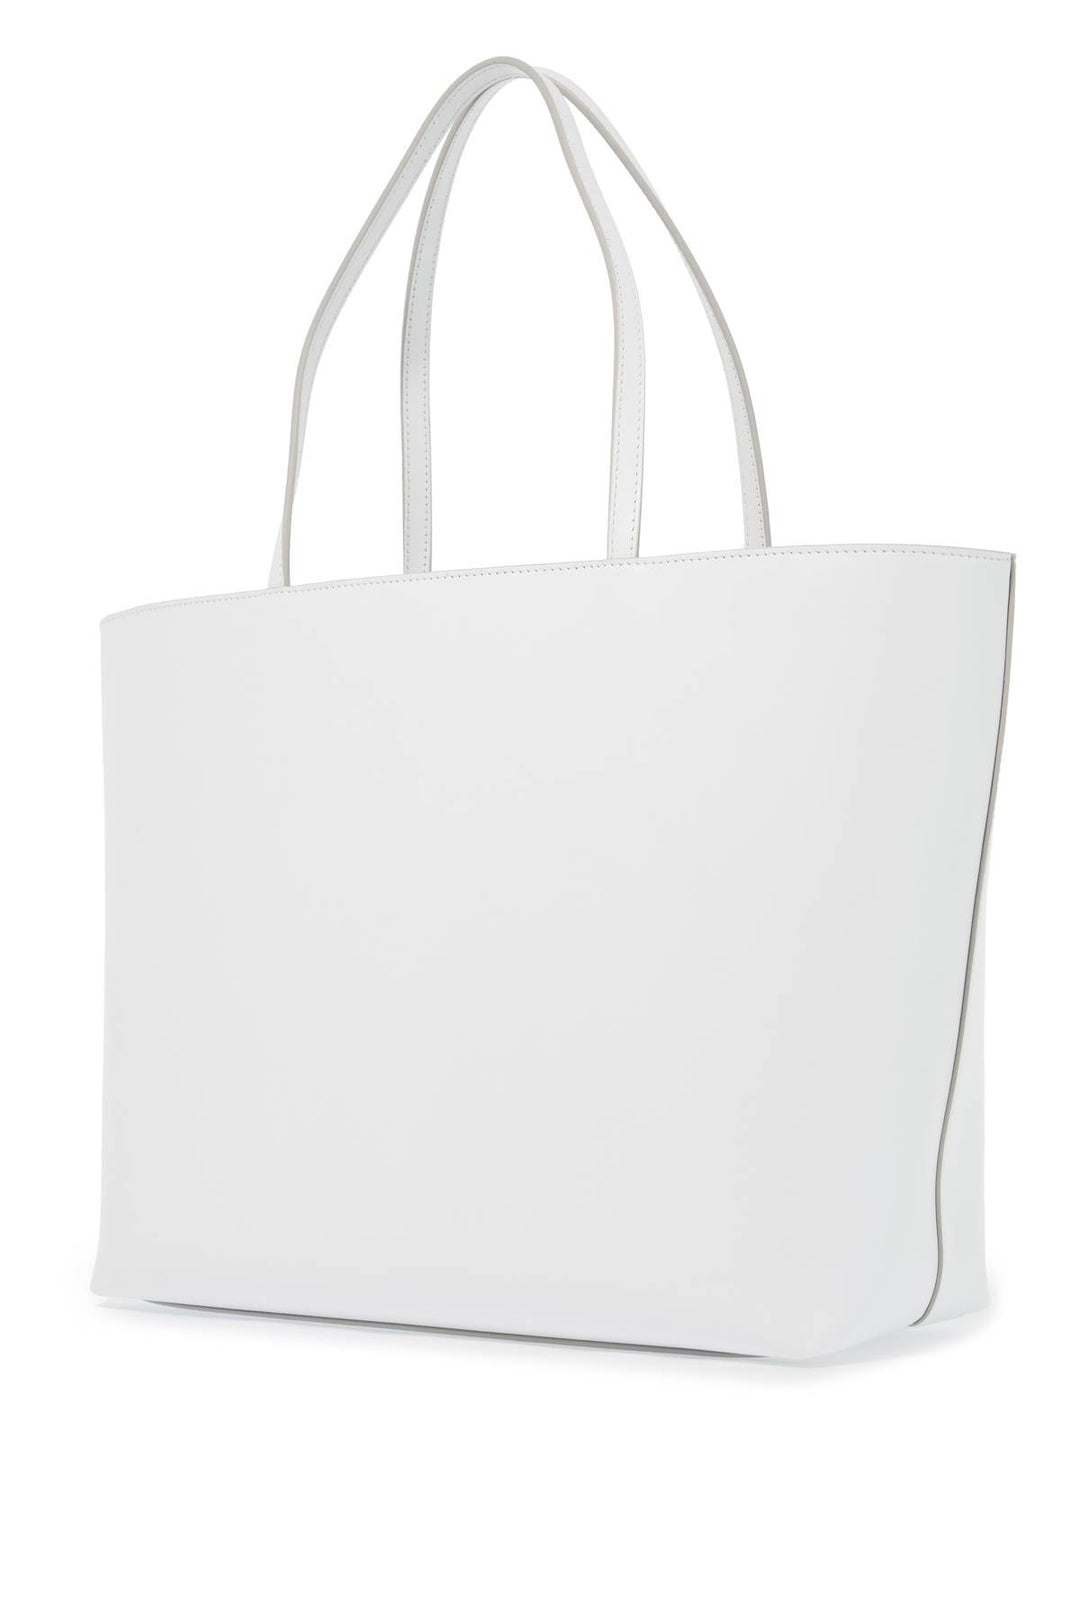 Dolce & Gabbana Dg Logo Tote Bag   White